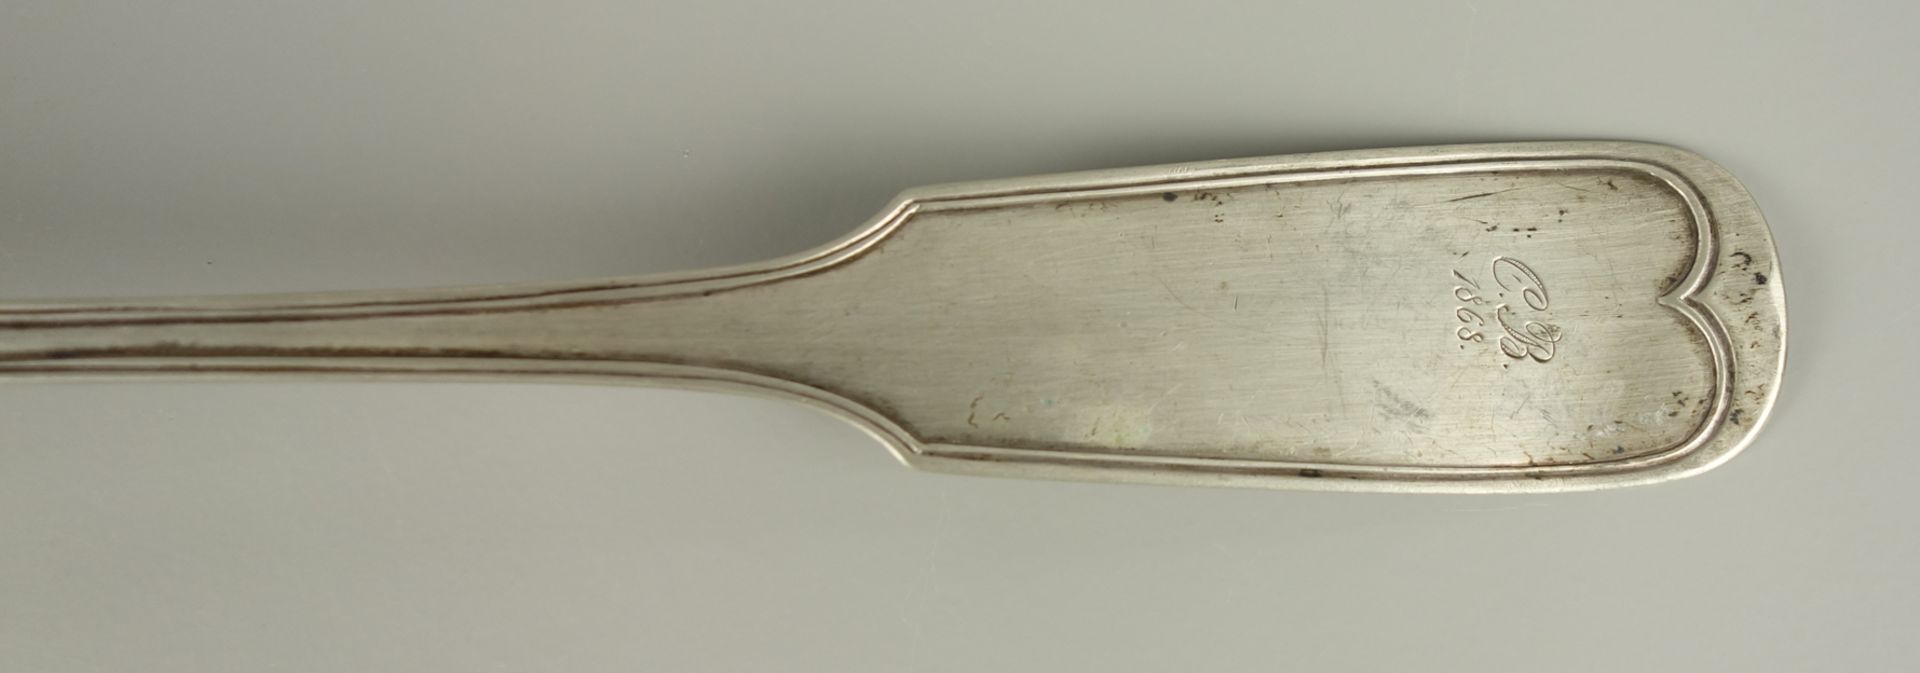 große Kelle, Dekor Augsburger Faden, F. Diercks, 12 Lot Silber - Bild 2 aus 3